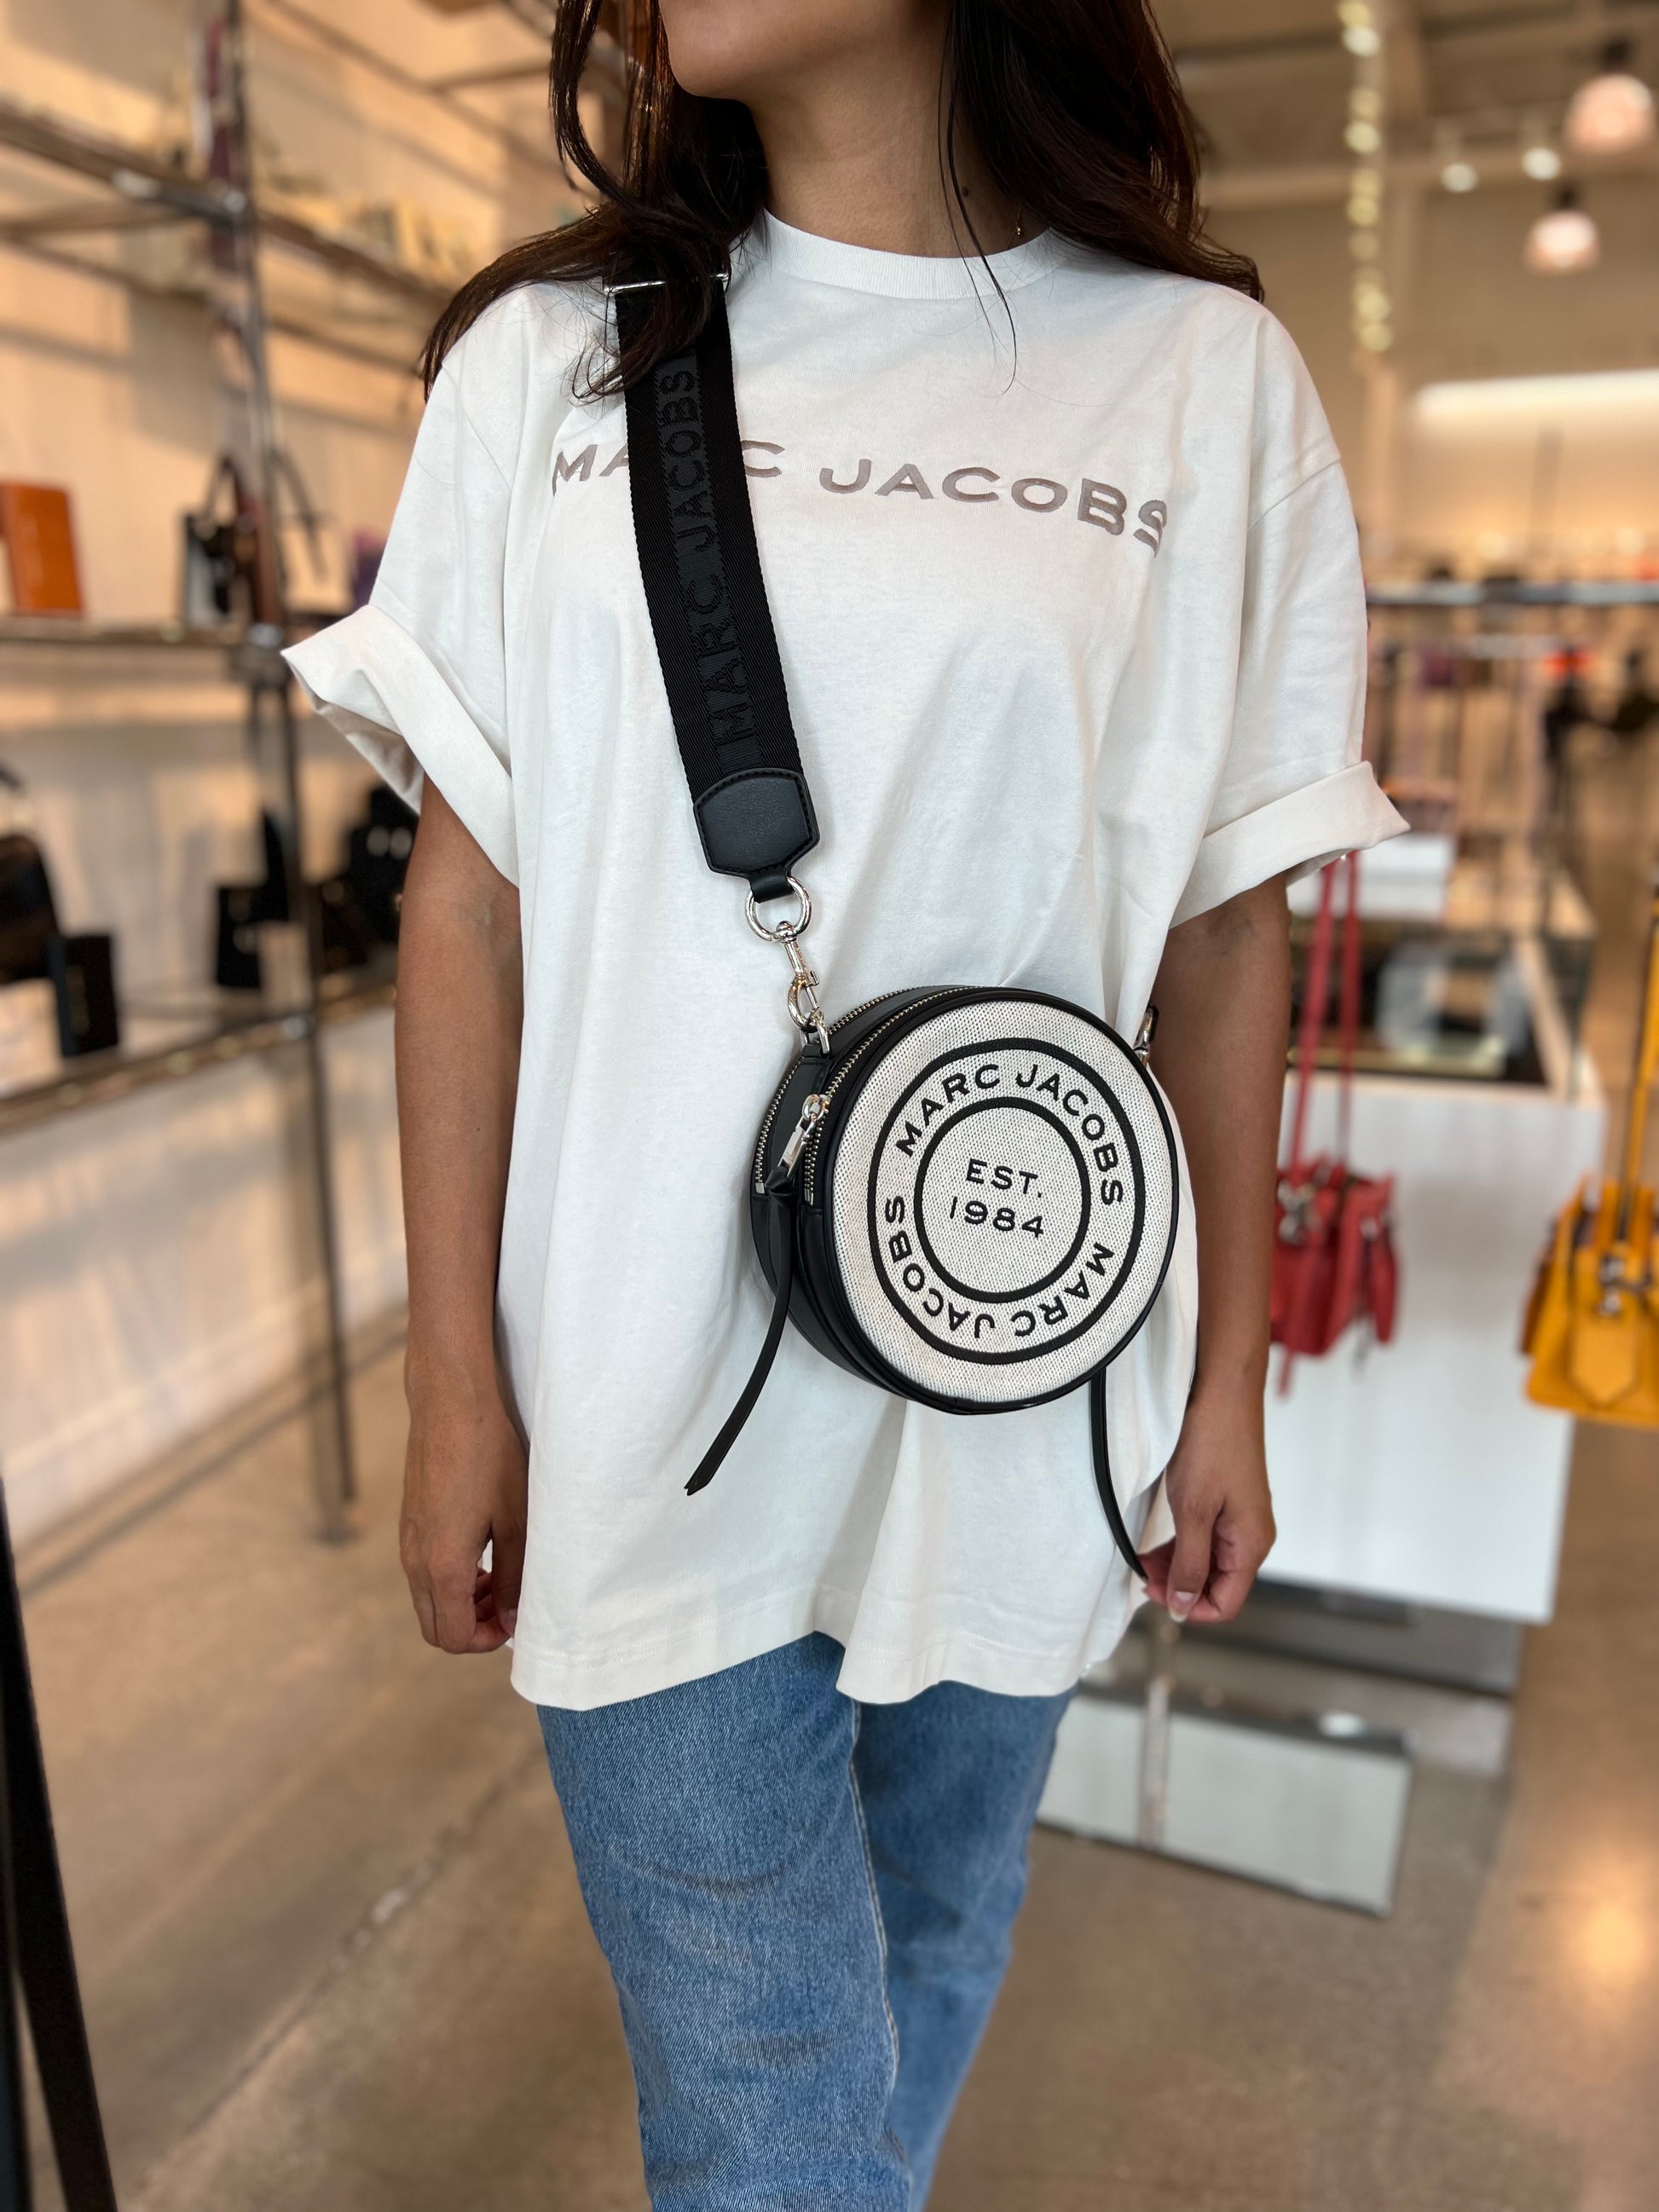 Marc Jacobs Signet Flash Crossbody Bag